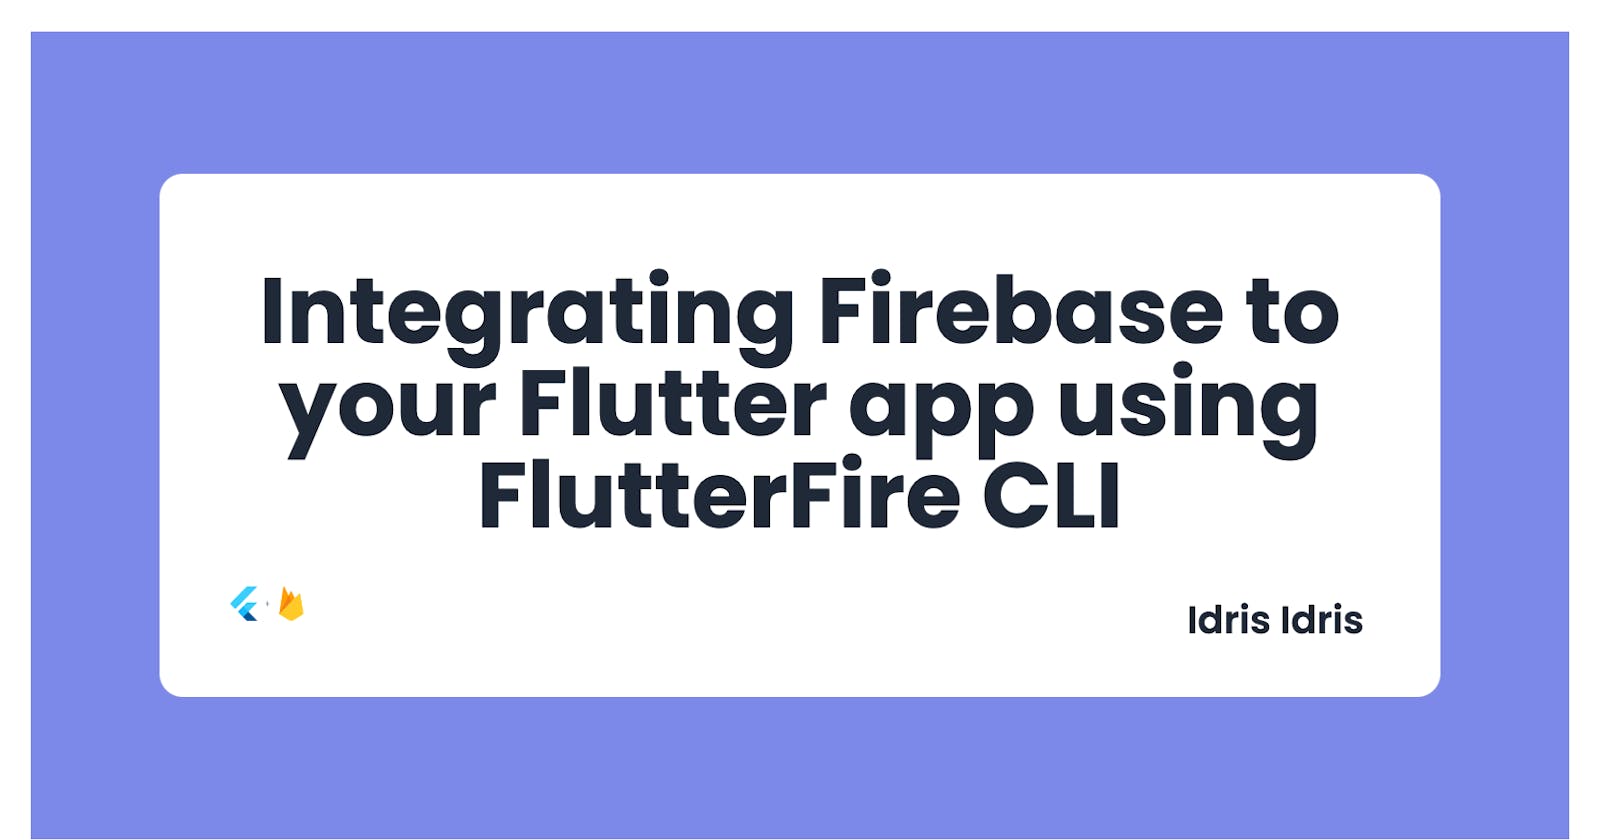 Integrating Firebase to your Flutter app using FlutterFire CLI